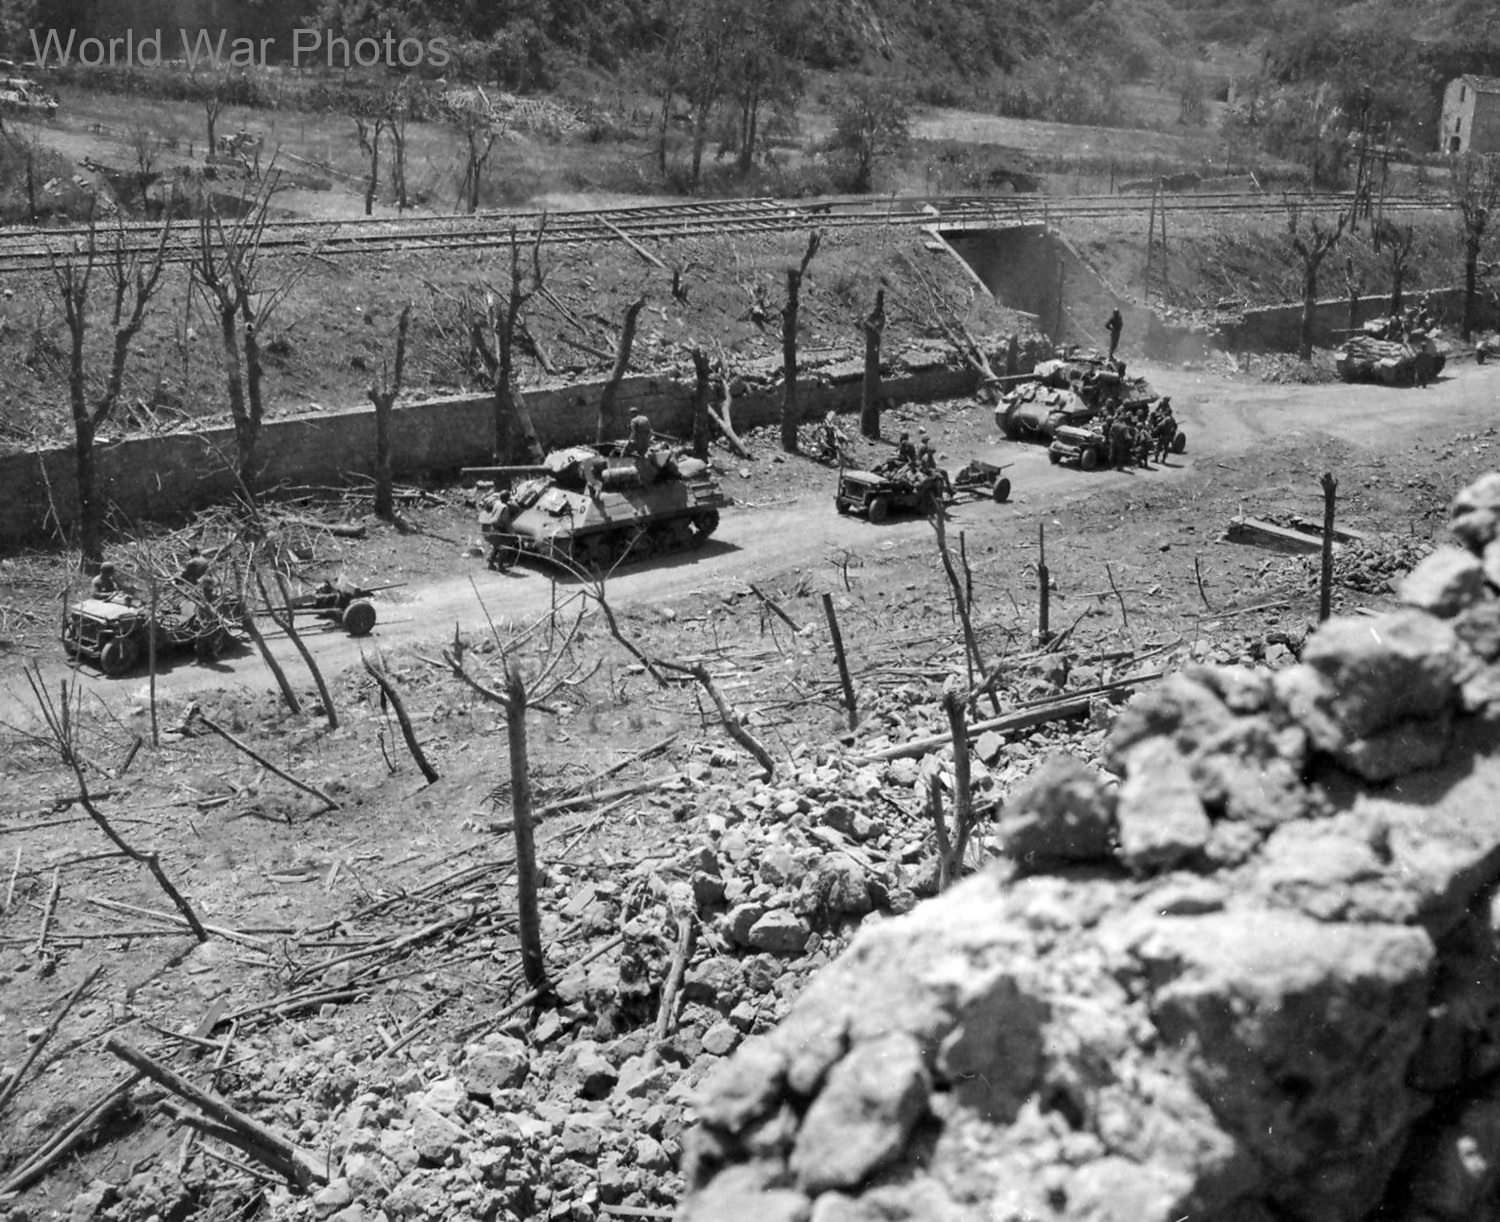 M10s in Valente Italy 2 June 1944